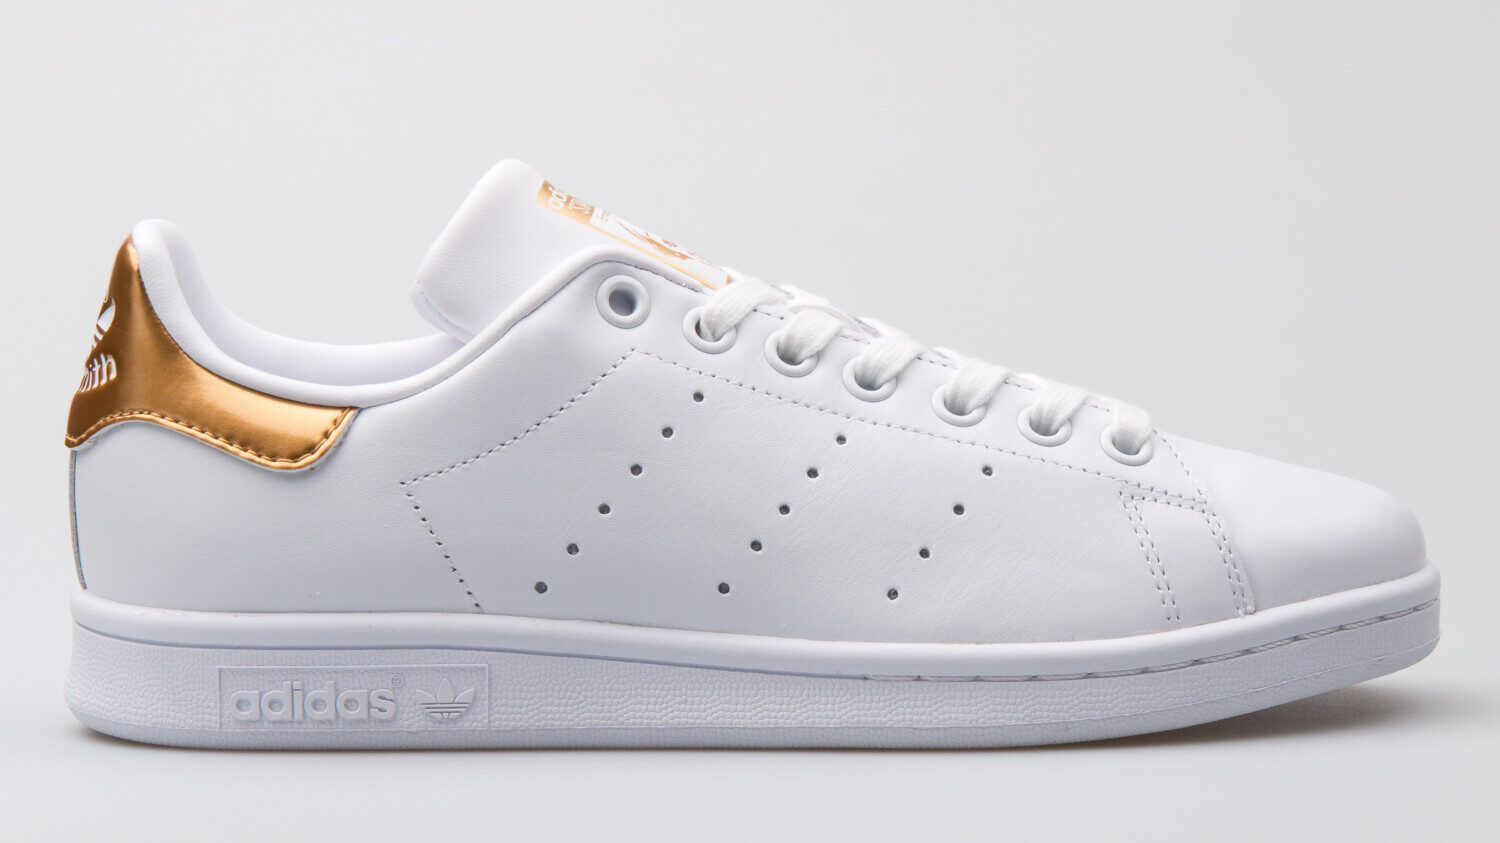 Adidas Stan Smith sneaker in white/gold